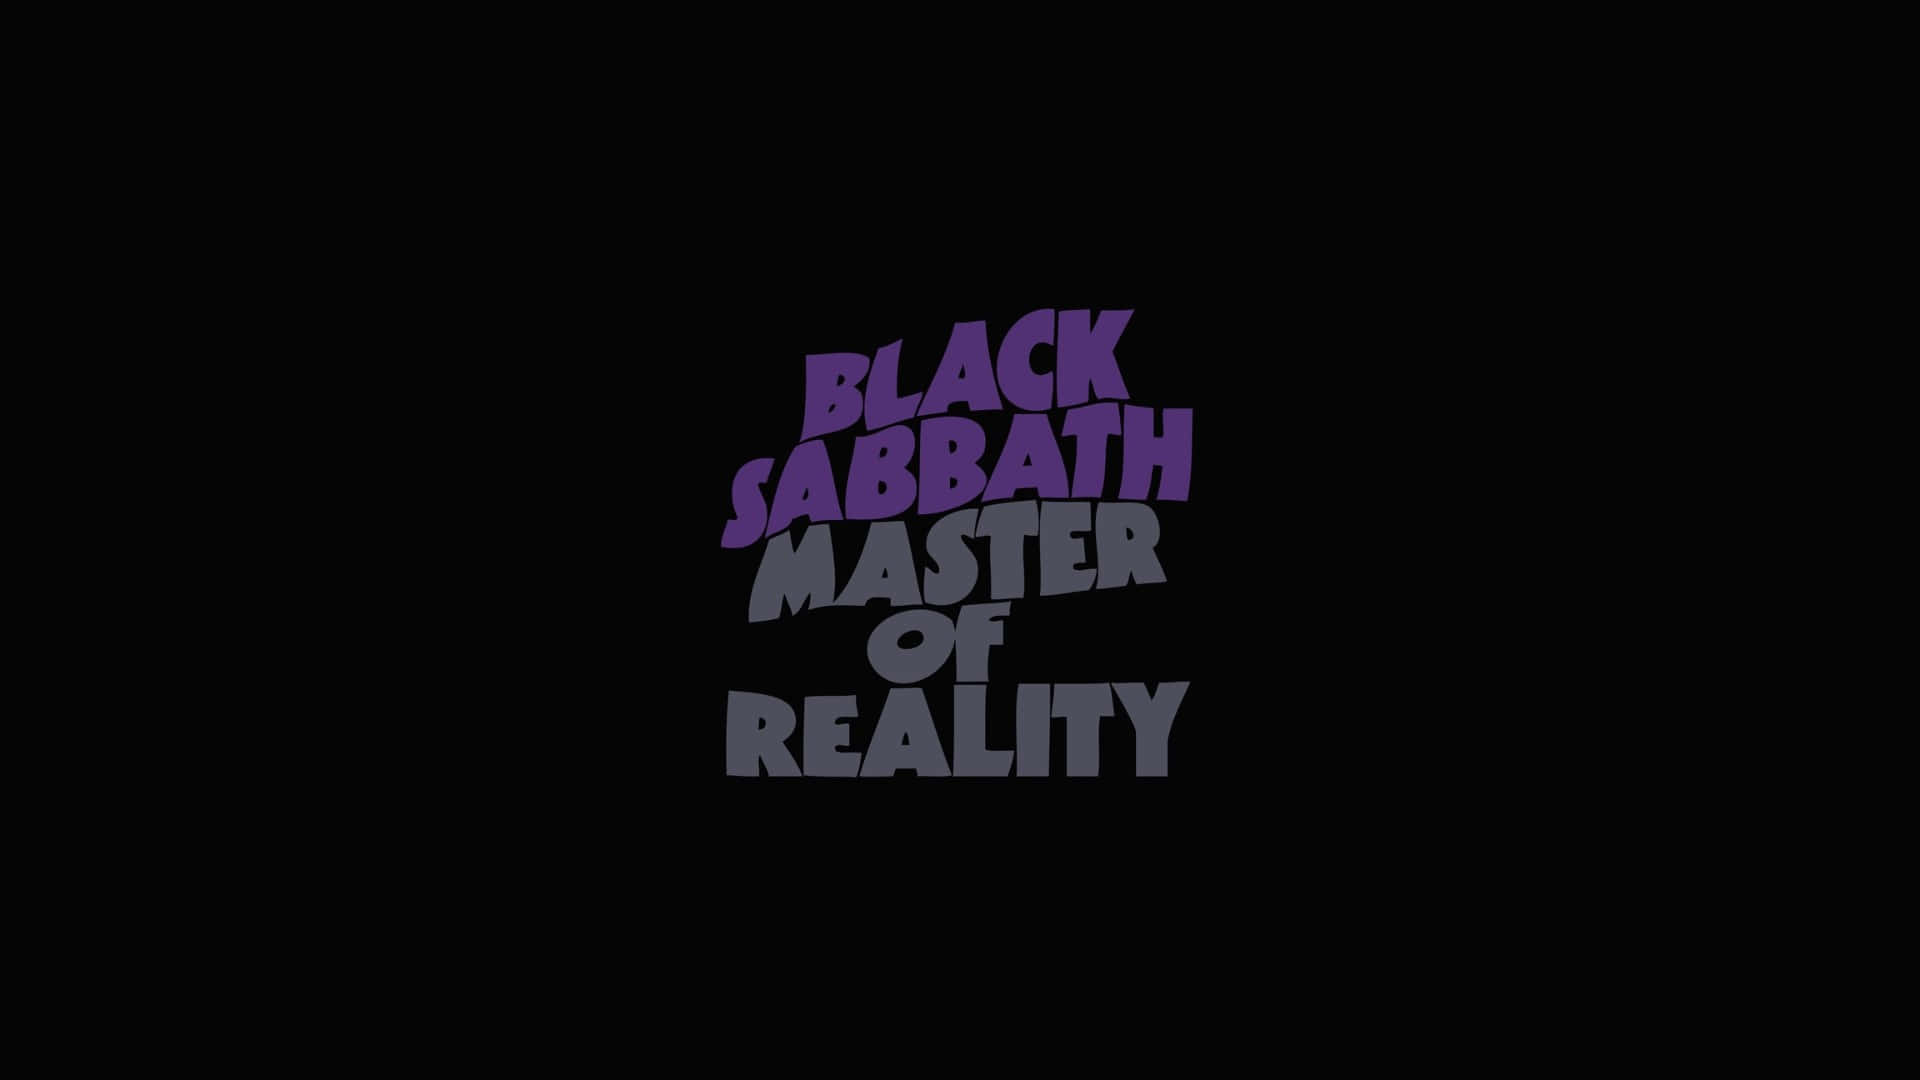 Black Sabbath Masterof Reality Album Cover Wallpaper